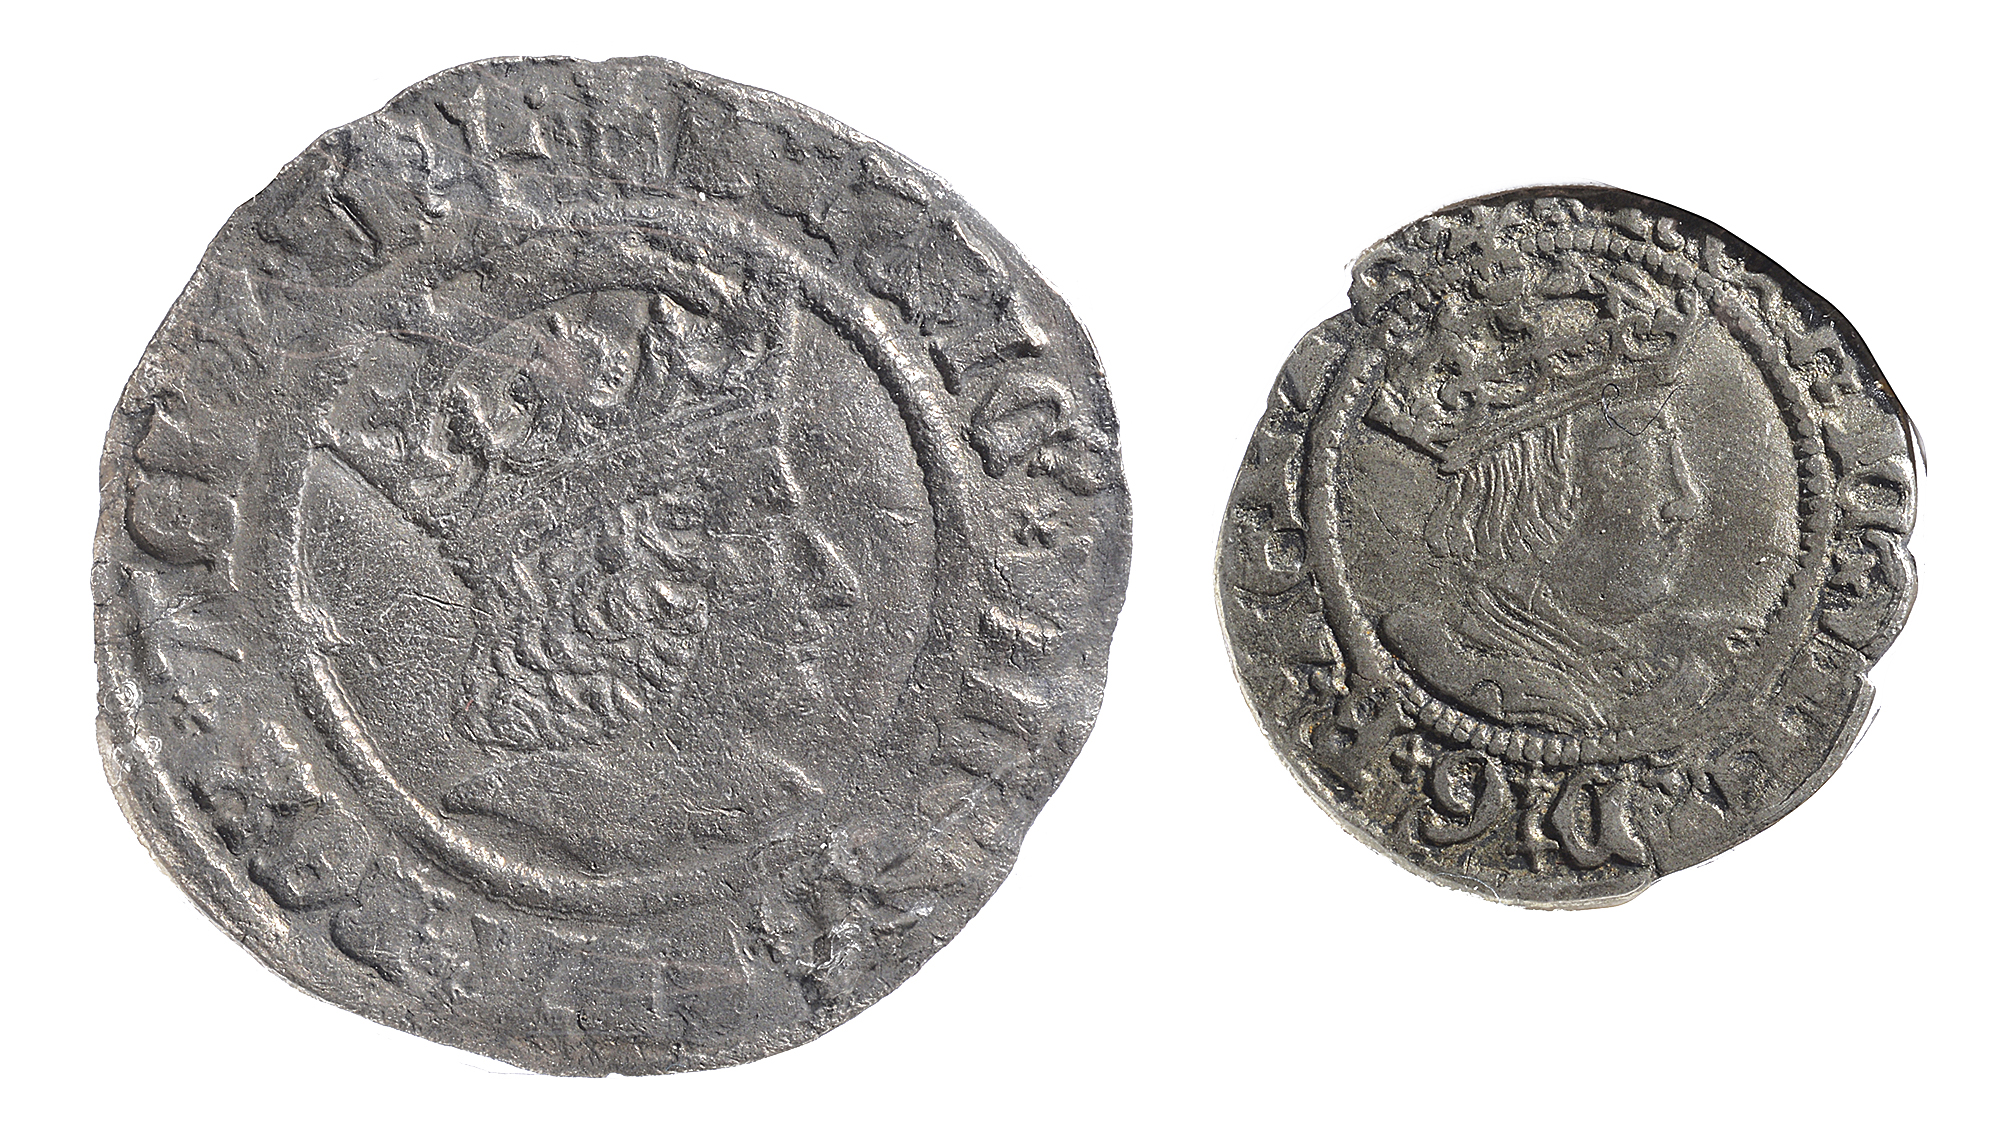 Henry VIII (1509-1547) silver groat and half groatfirst London, mint mark castle, HENRIC VIII DI GR?